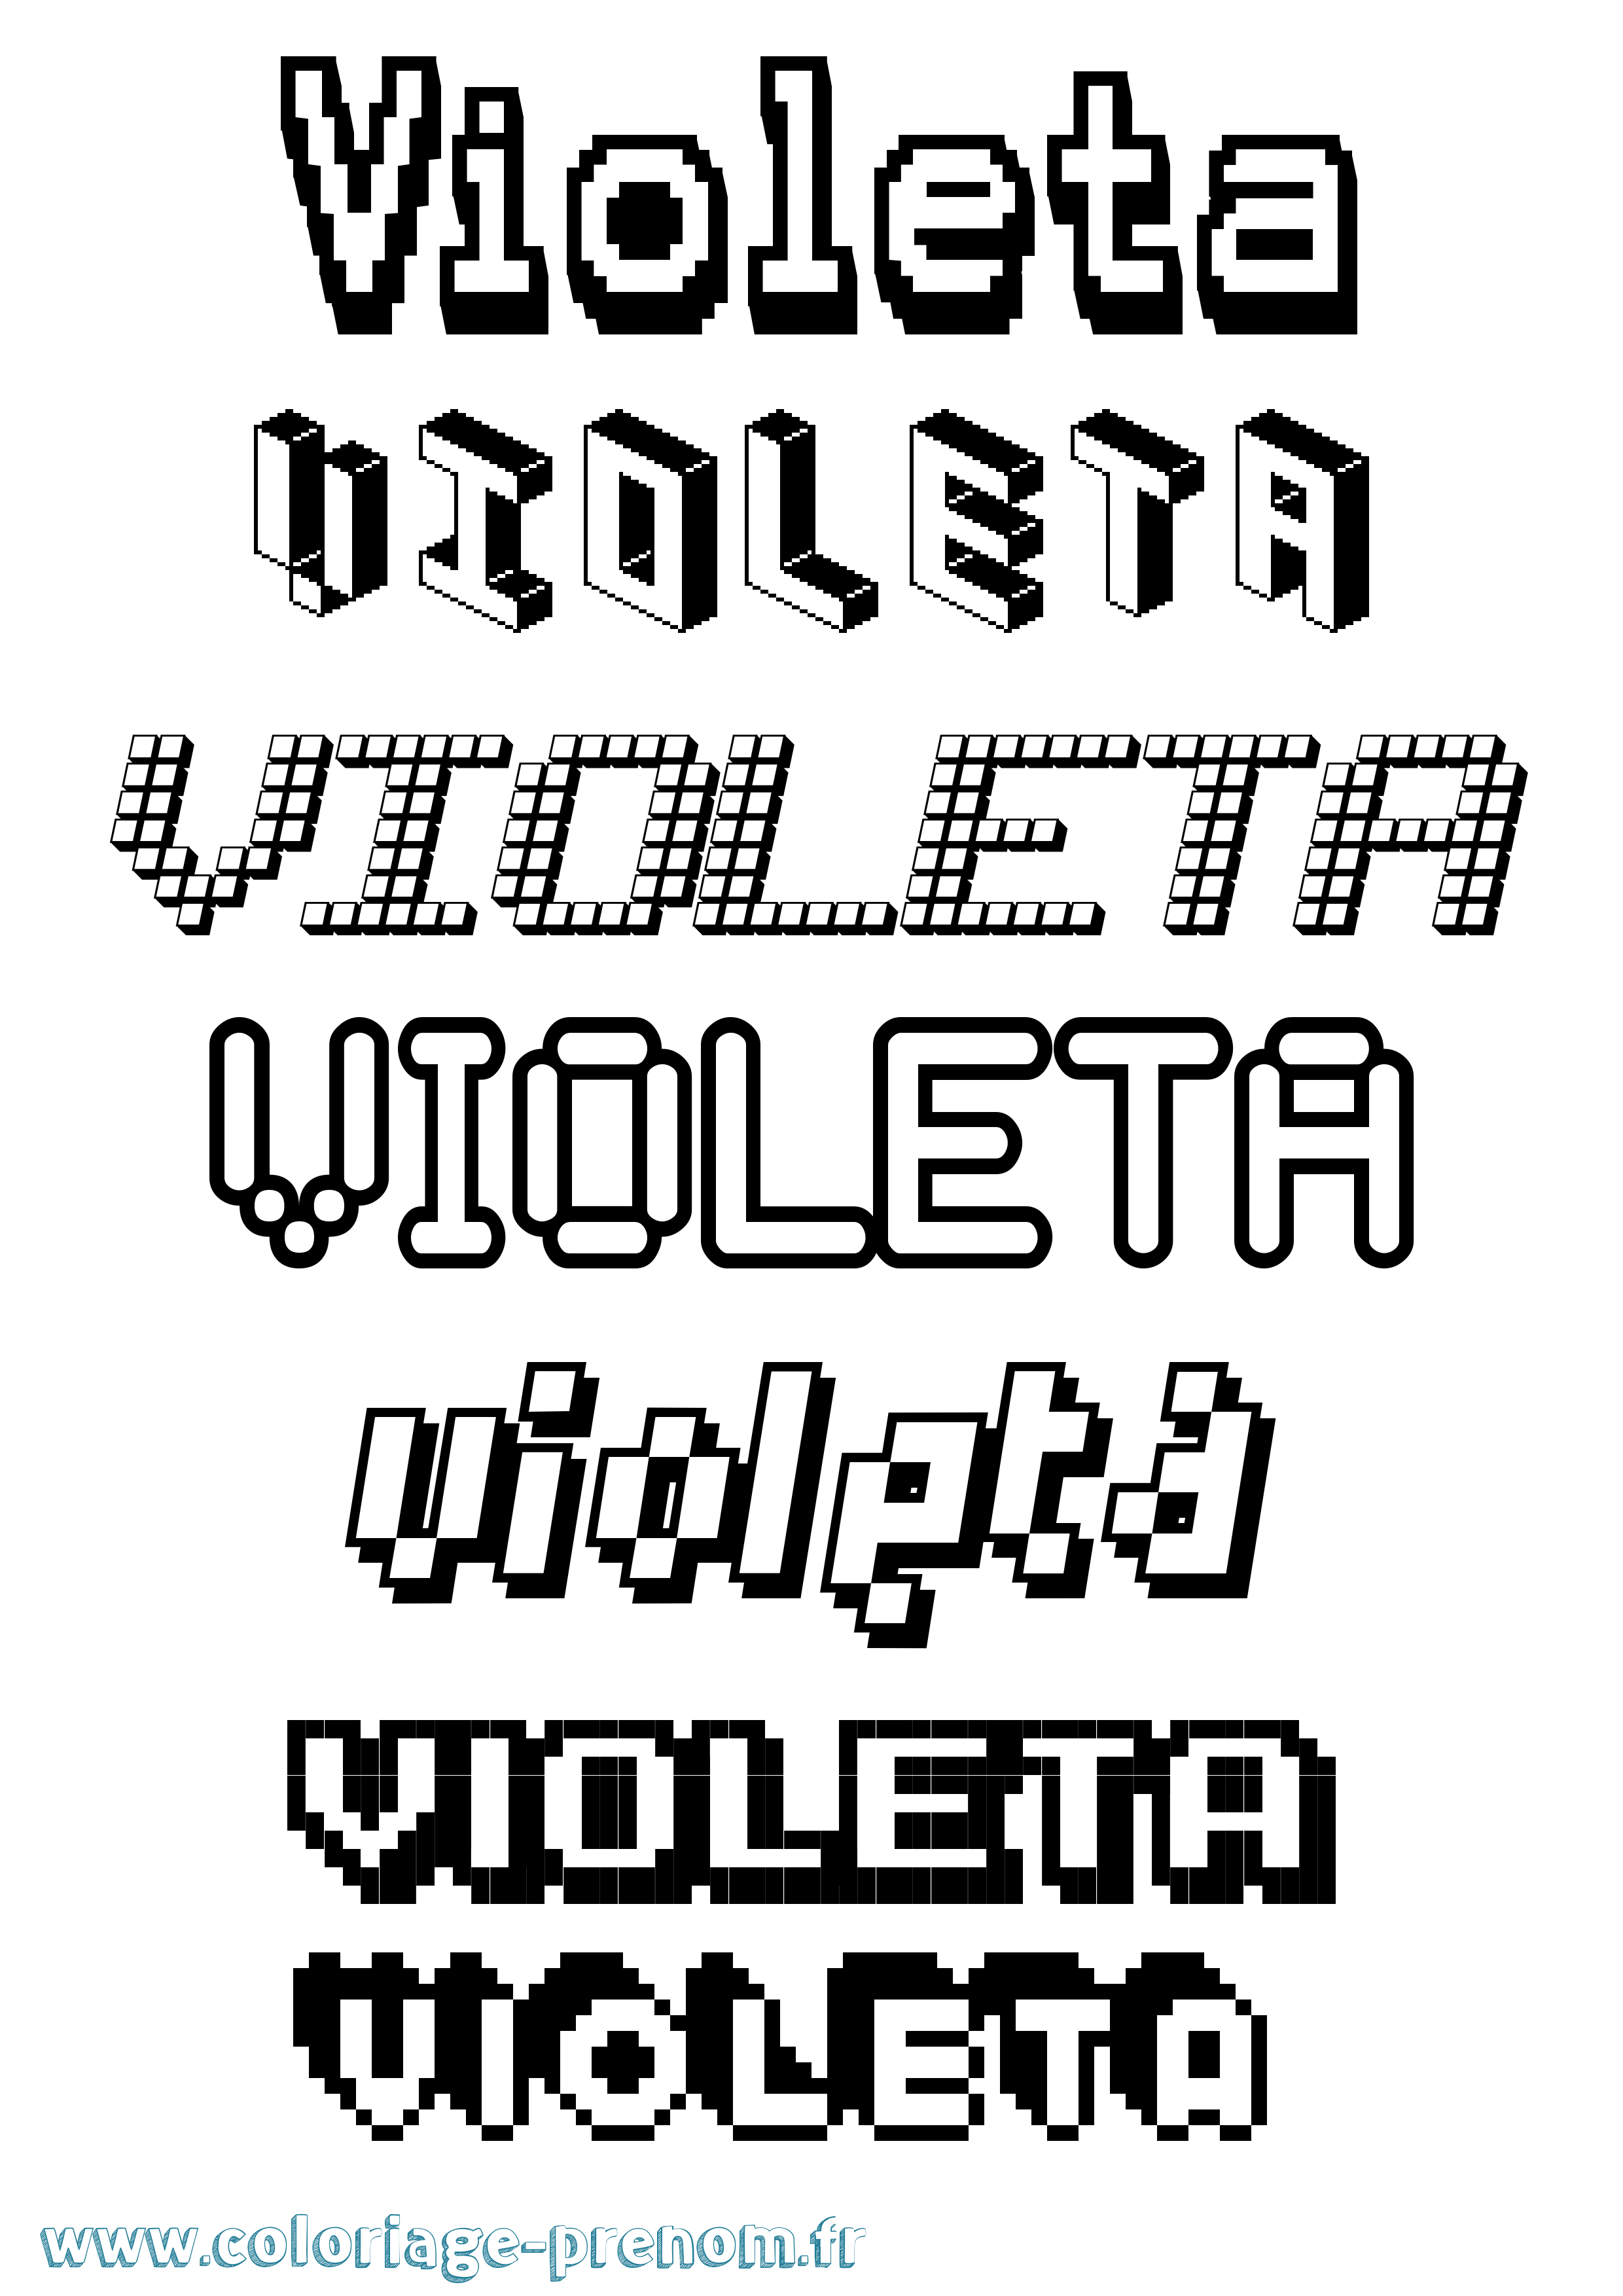 Coloriage prénom Violeta Pixel